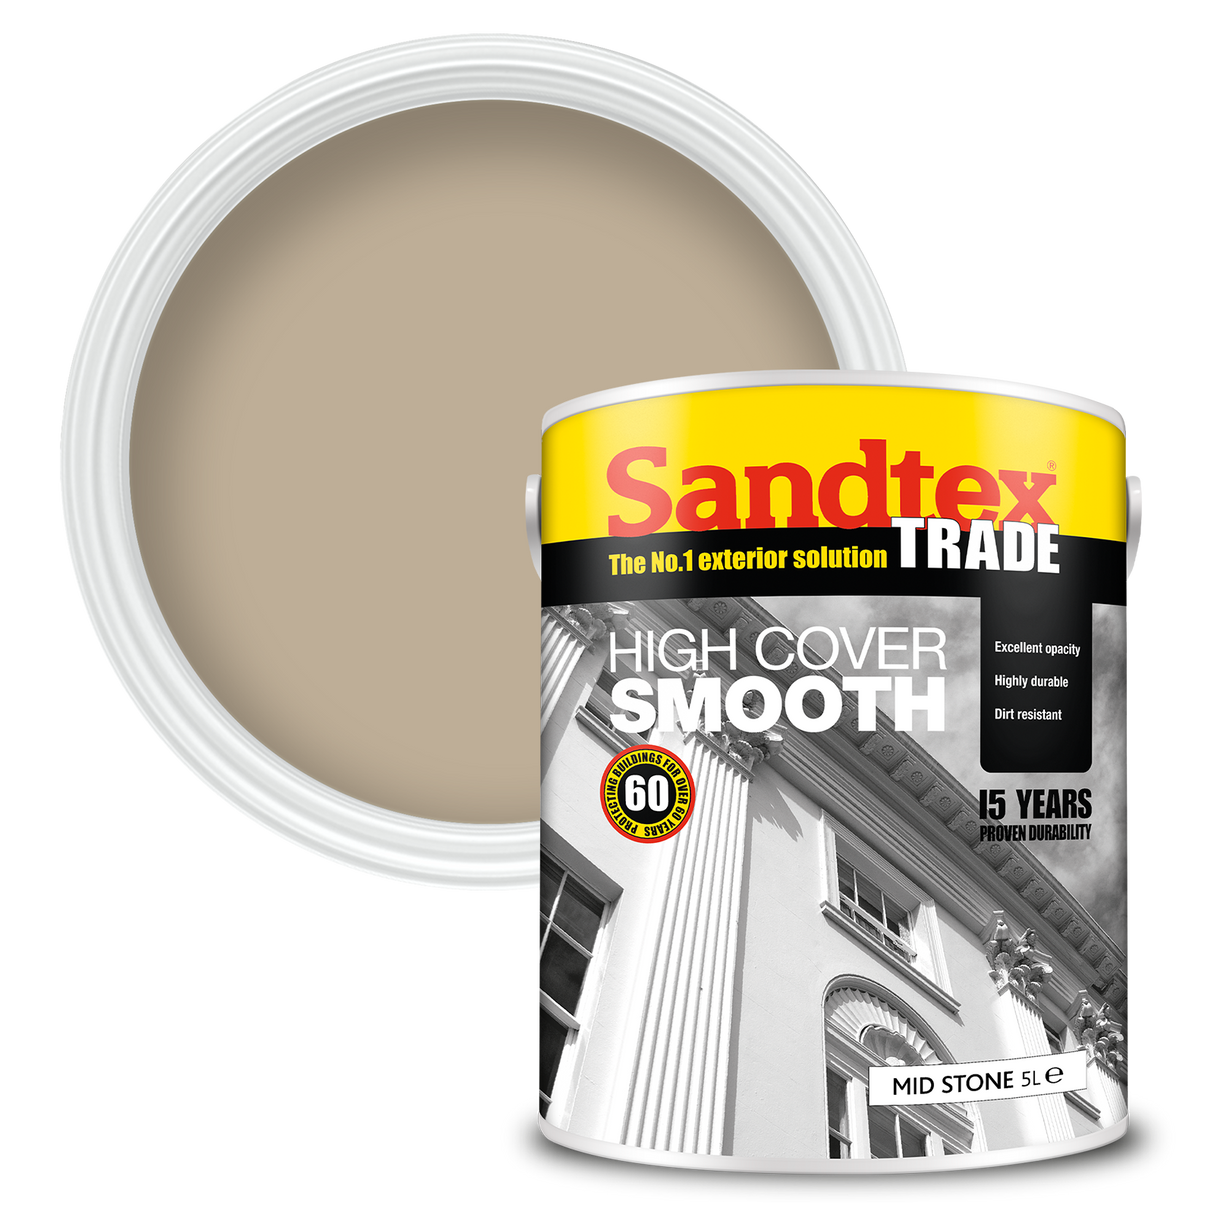 Sandtex-Trade-High-Cover-Smooth-MidStone-5L